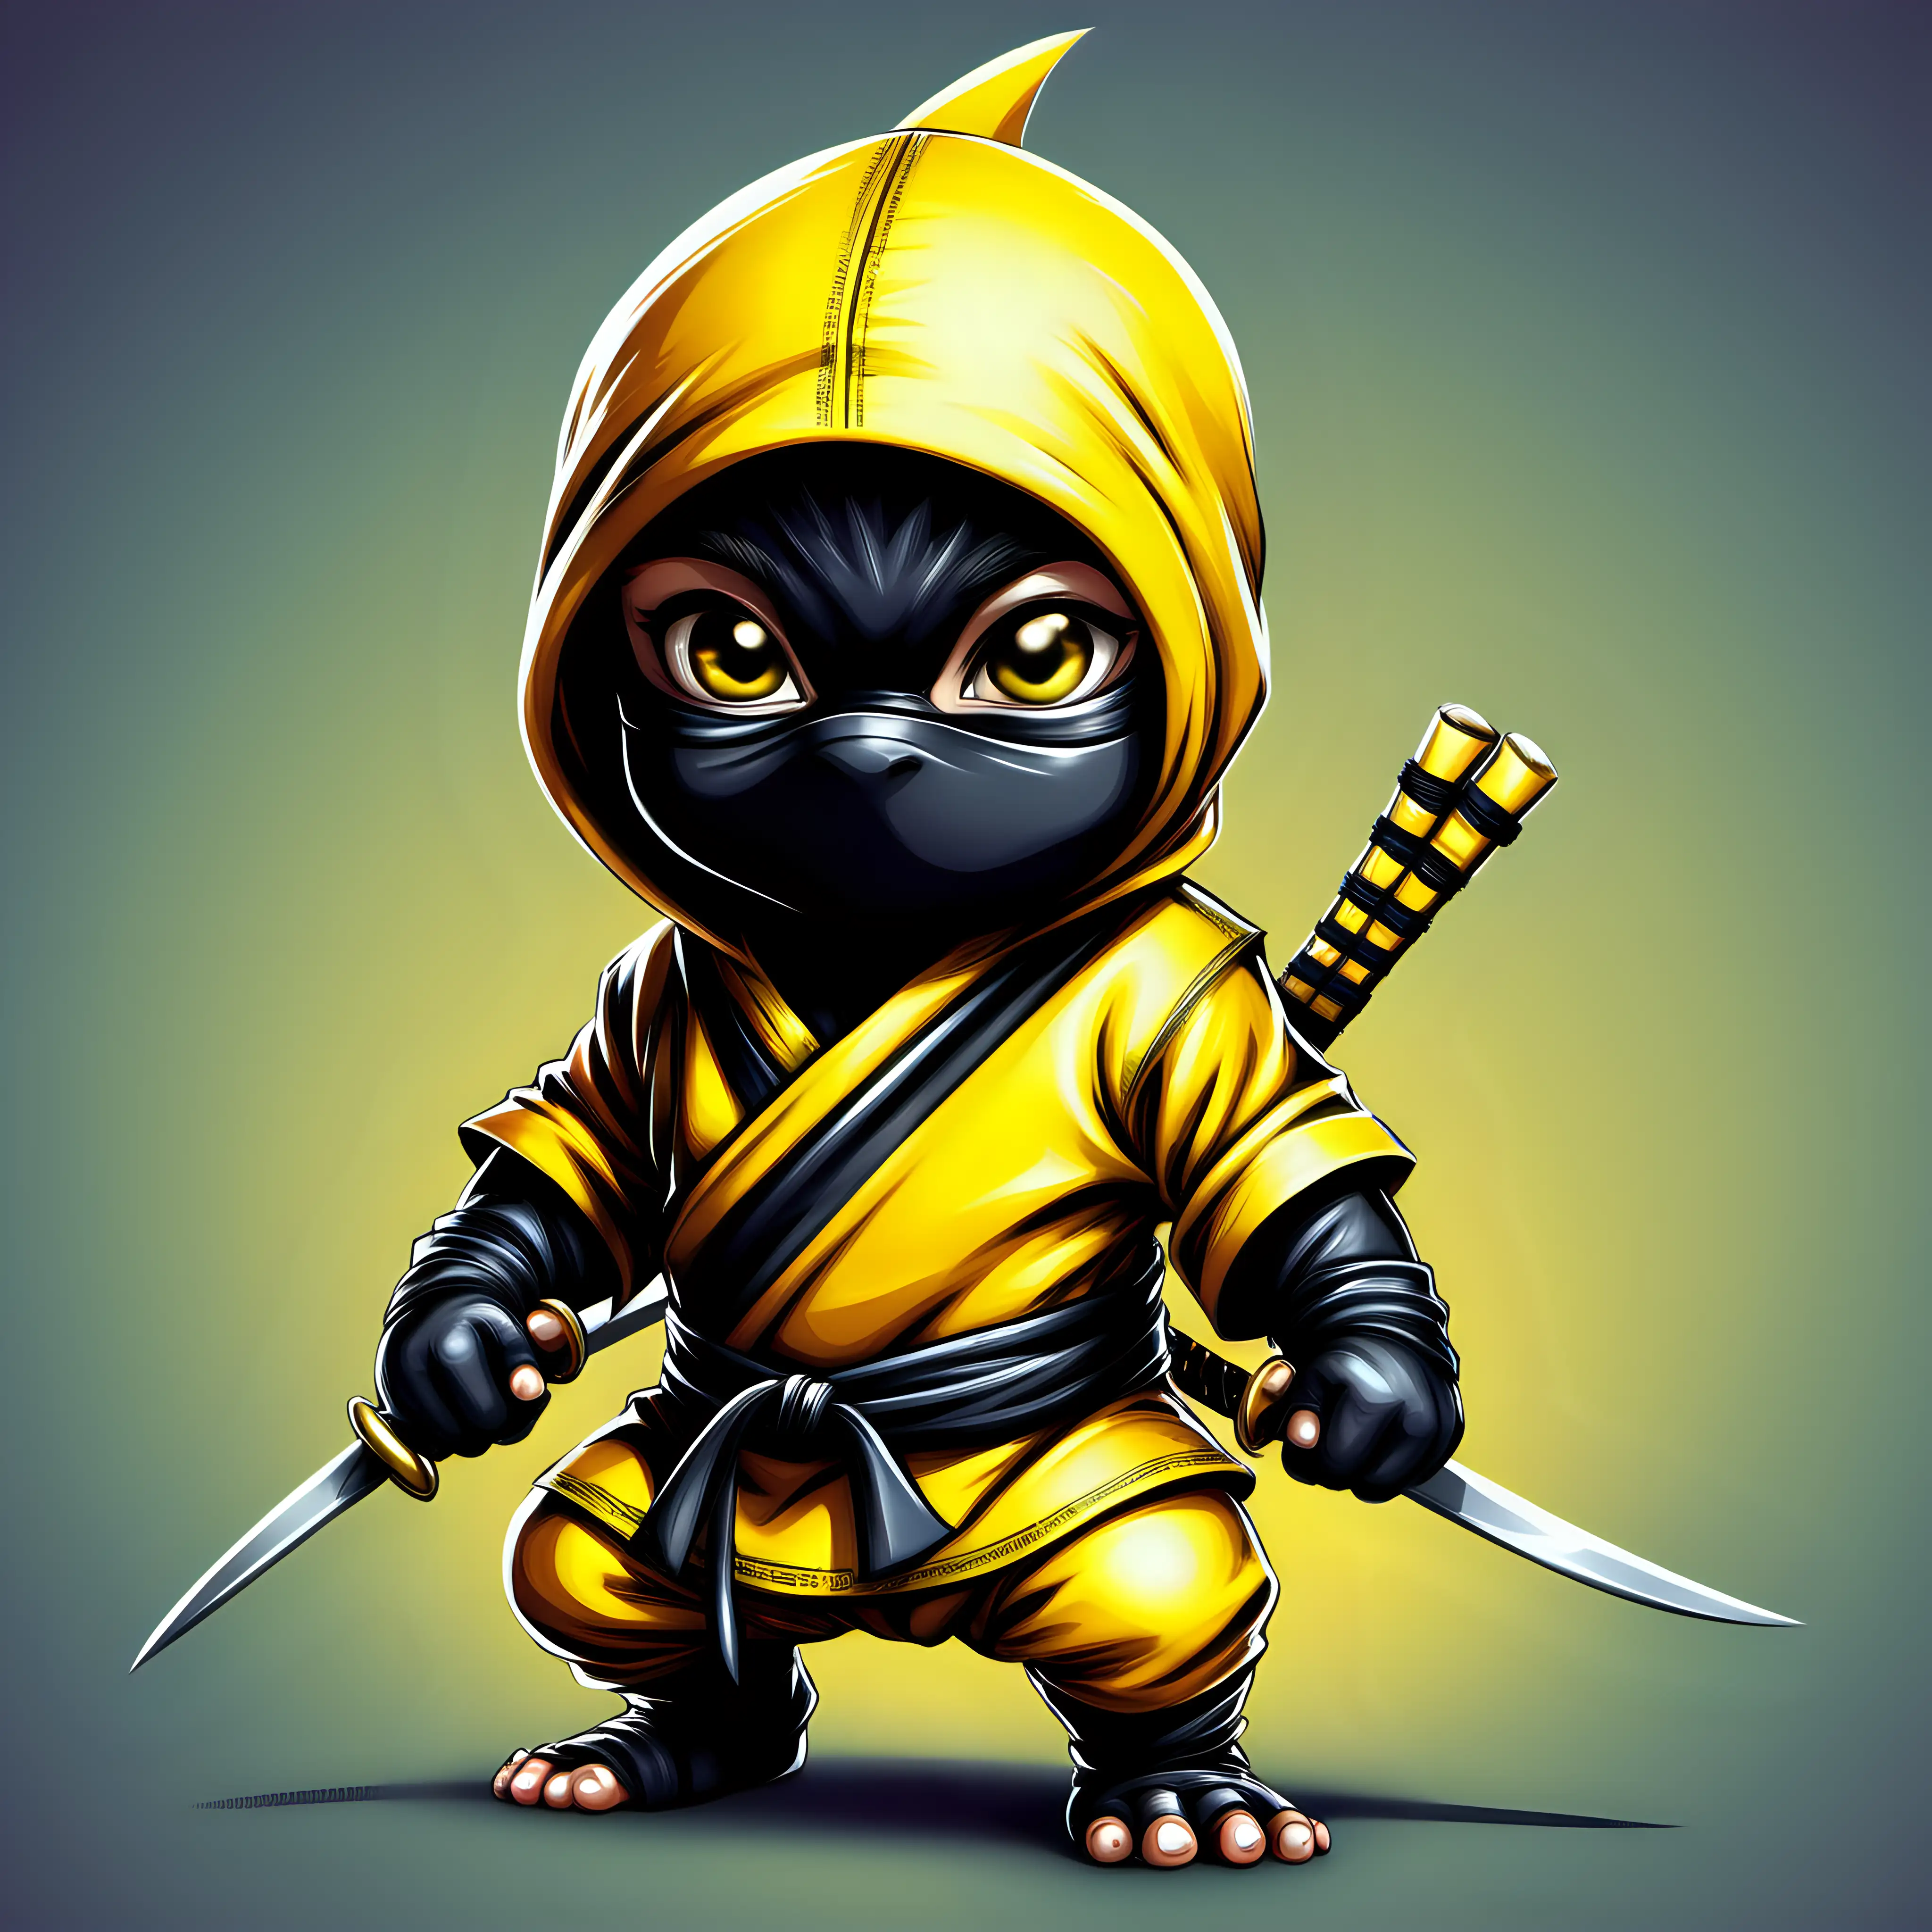 Kleiner süßer Baby Ninja als beliebiges Tier, Comic Style, hohe Details, gelbe Farben 